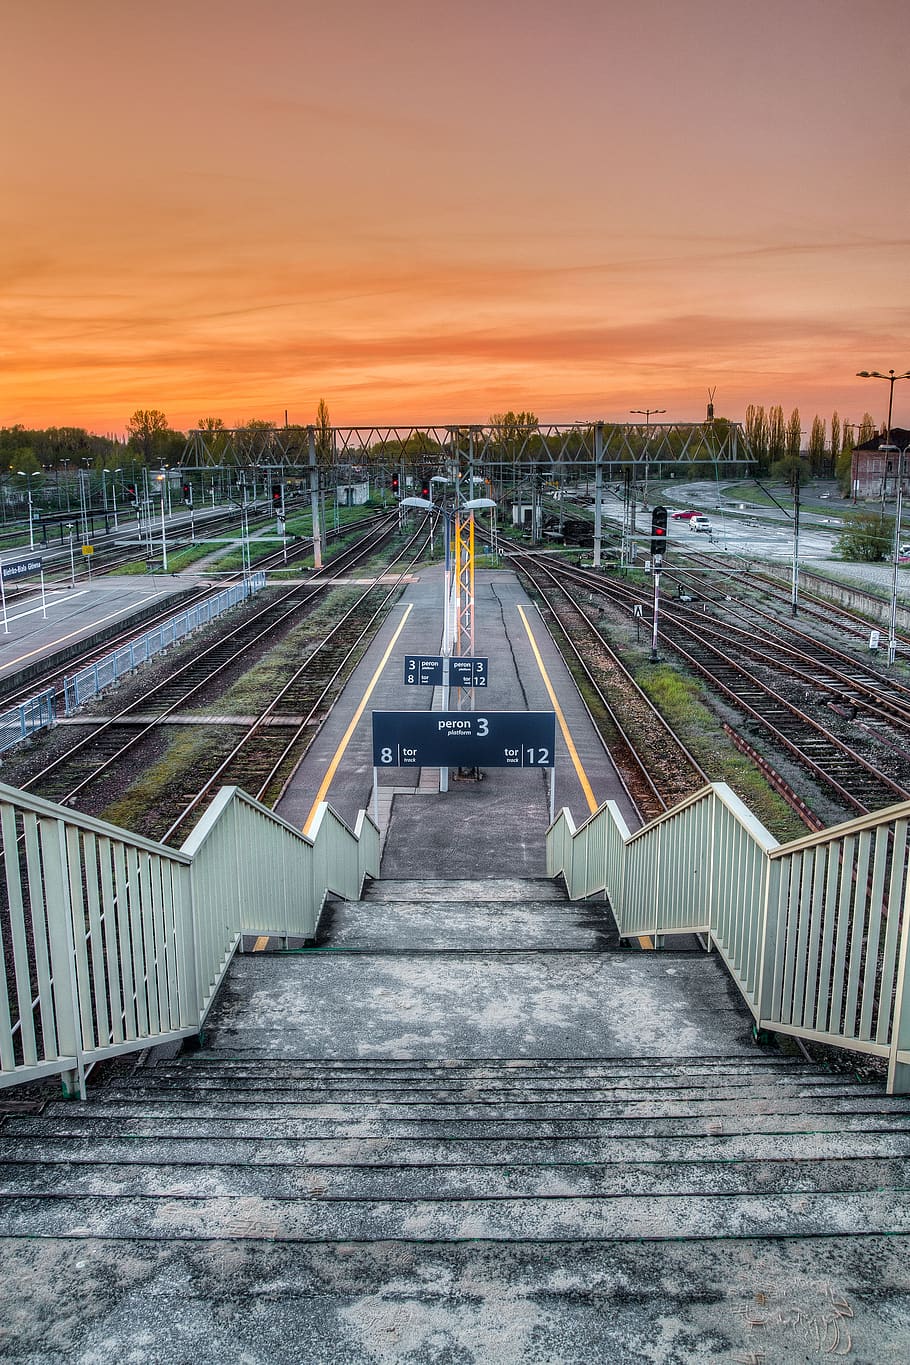 railway, track, outdoor, travel, station, sunset, sky, stairs, stoplight, transportation